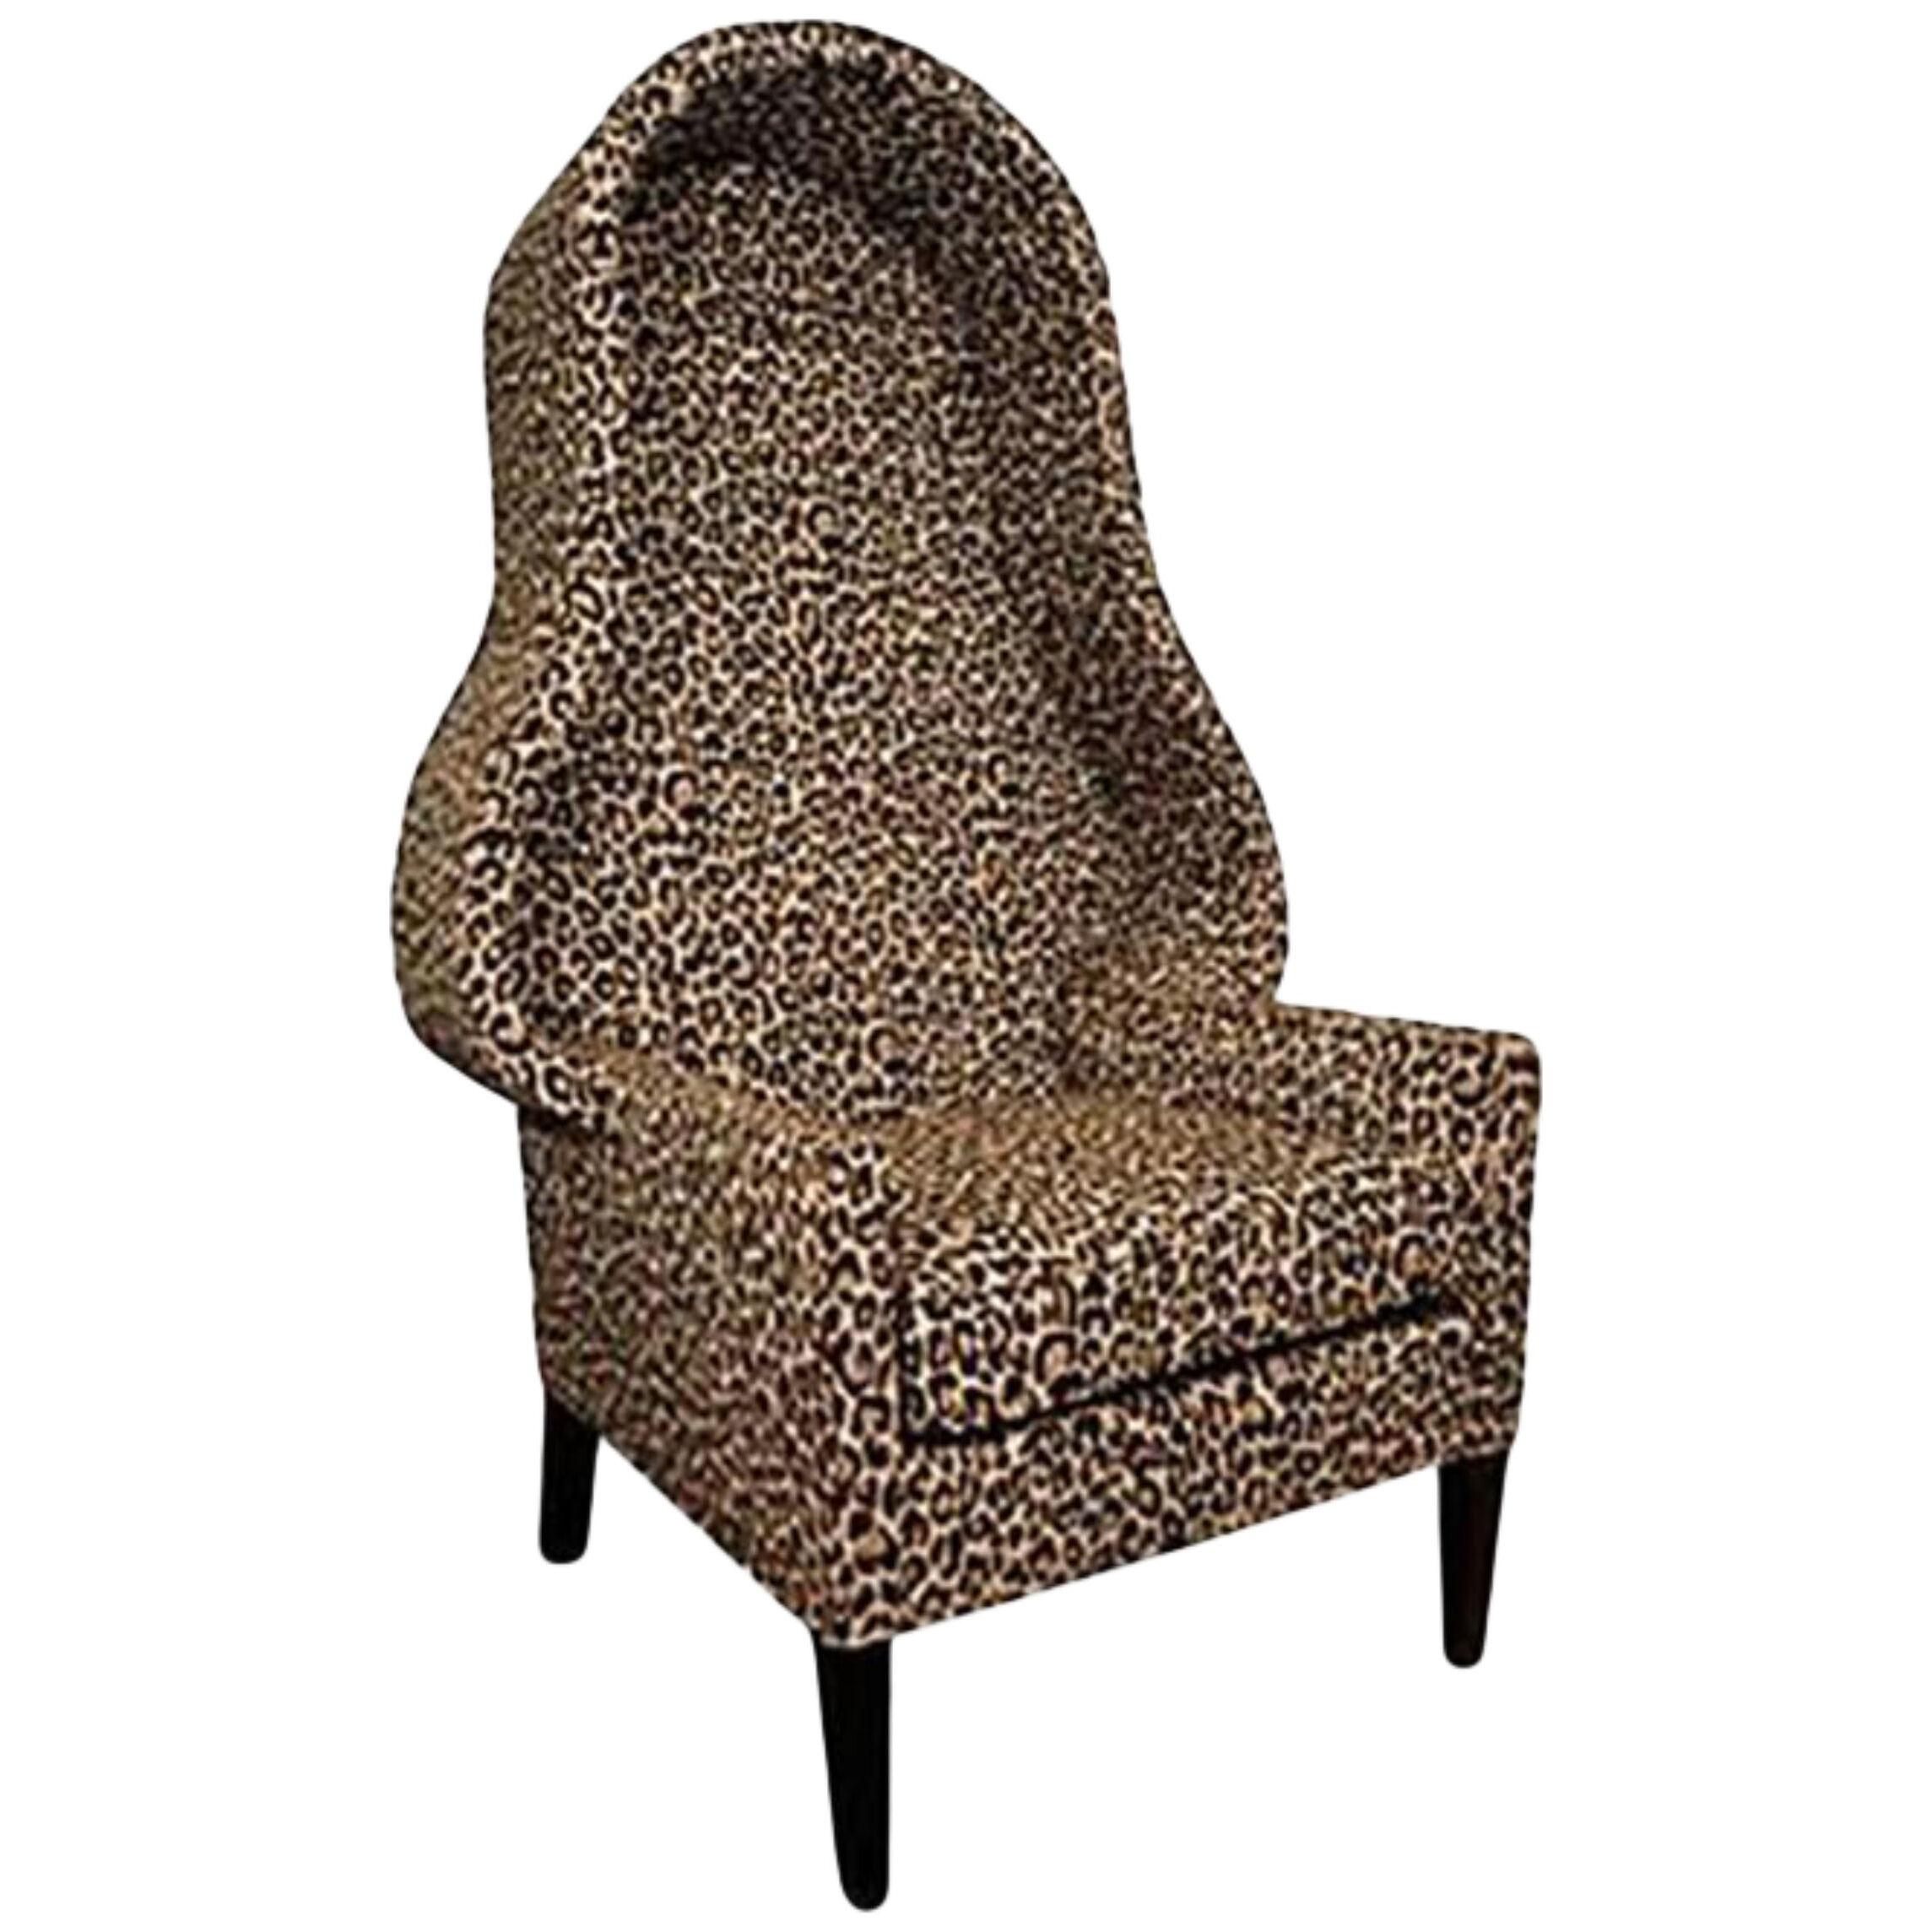 Hollywood Regency Leopard Print Canopy Chair	